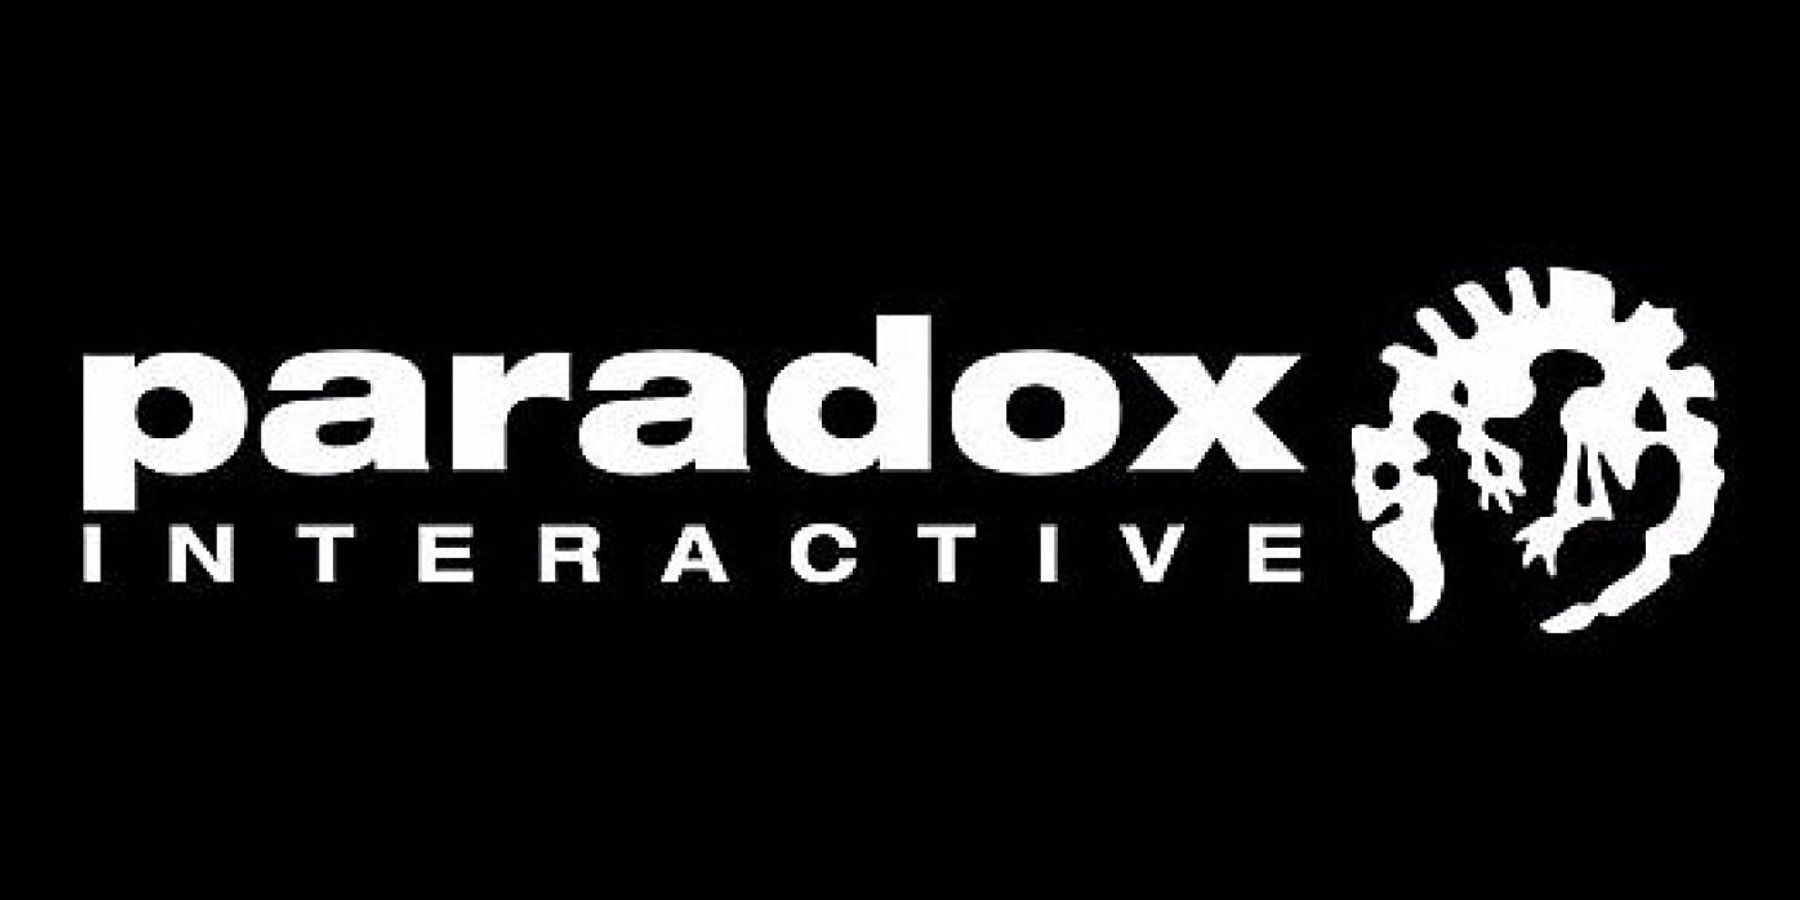 paradox interactive logo black background